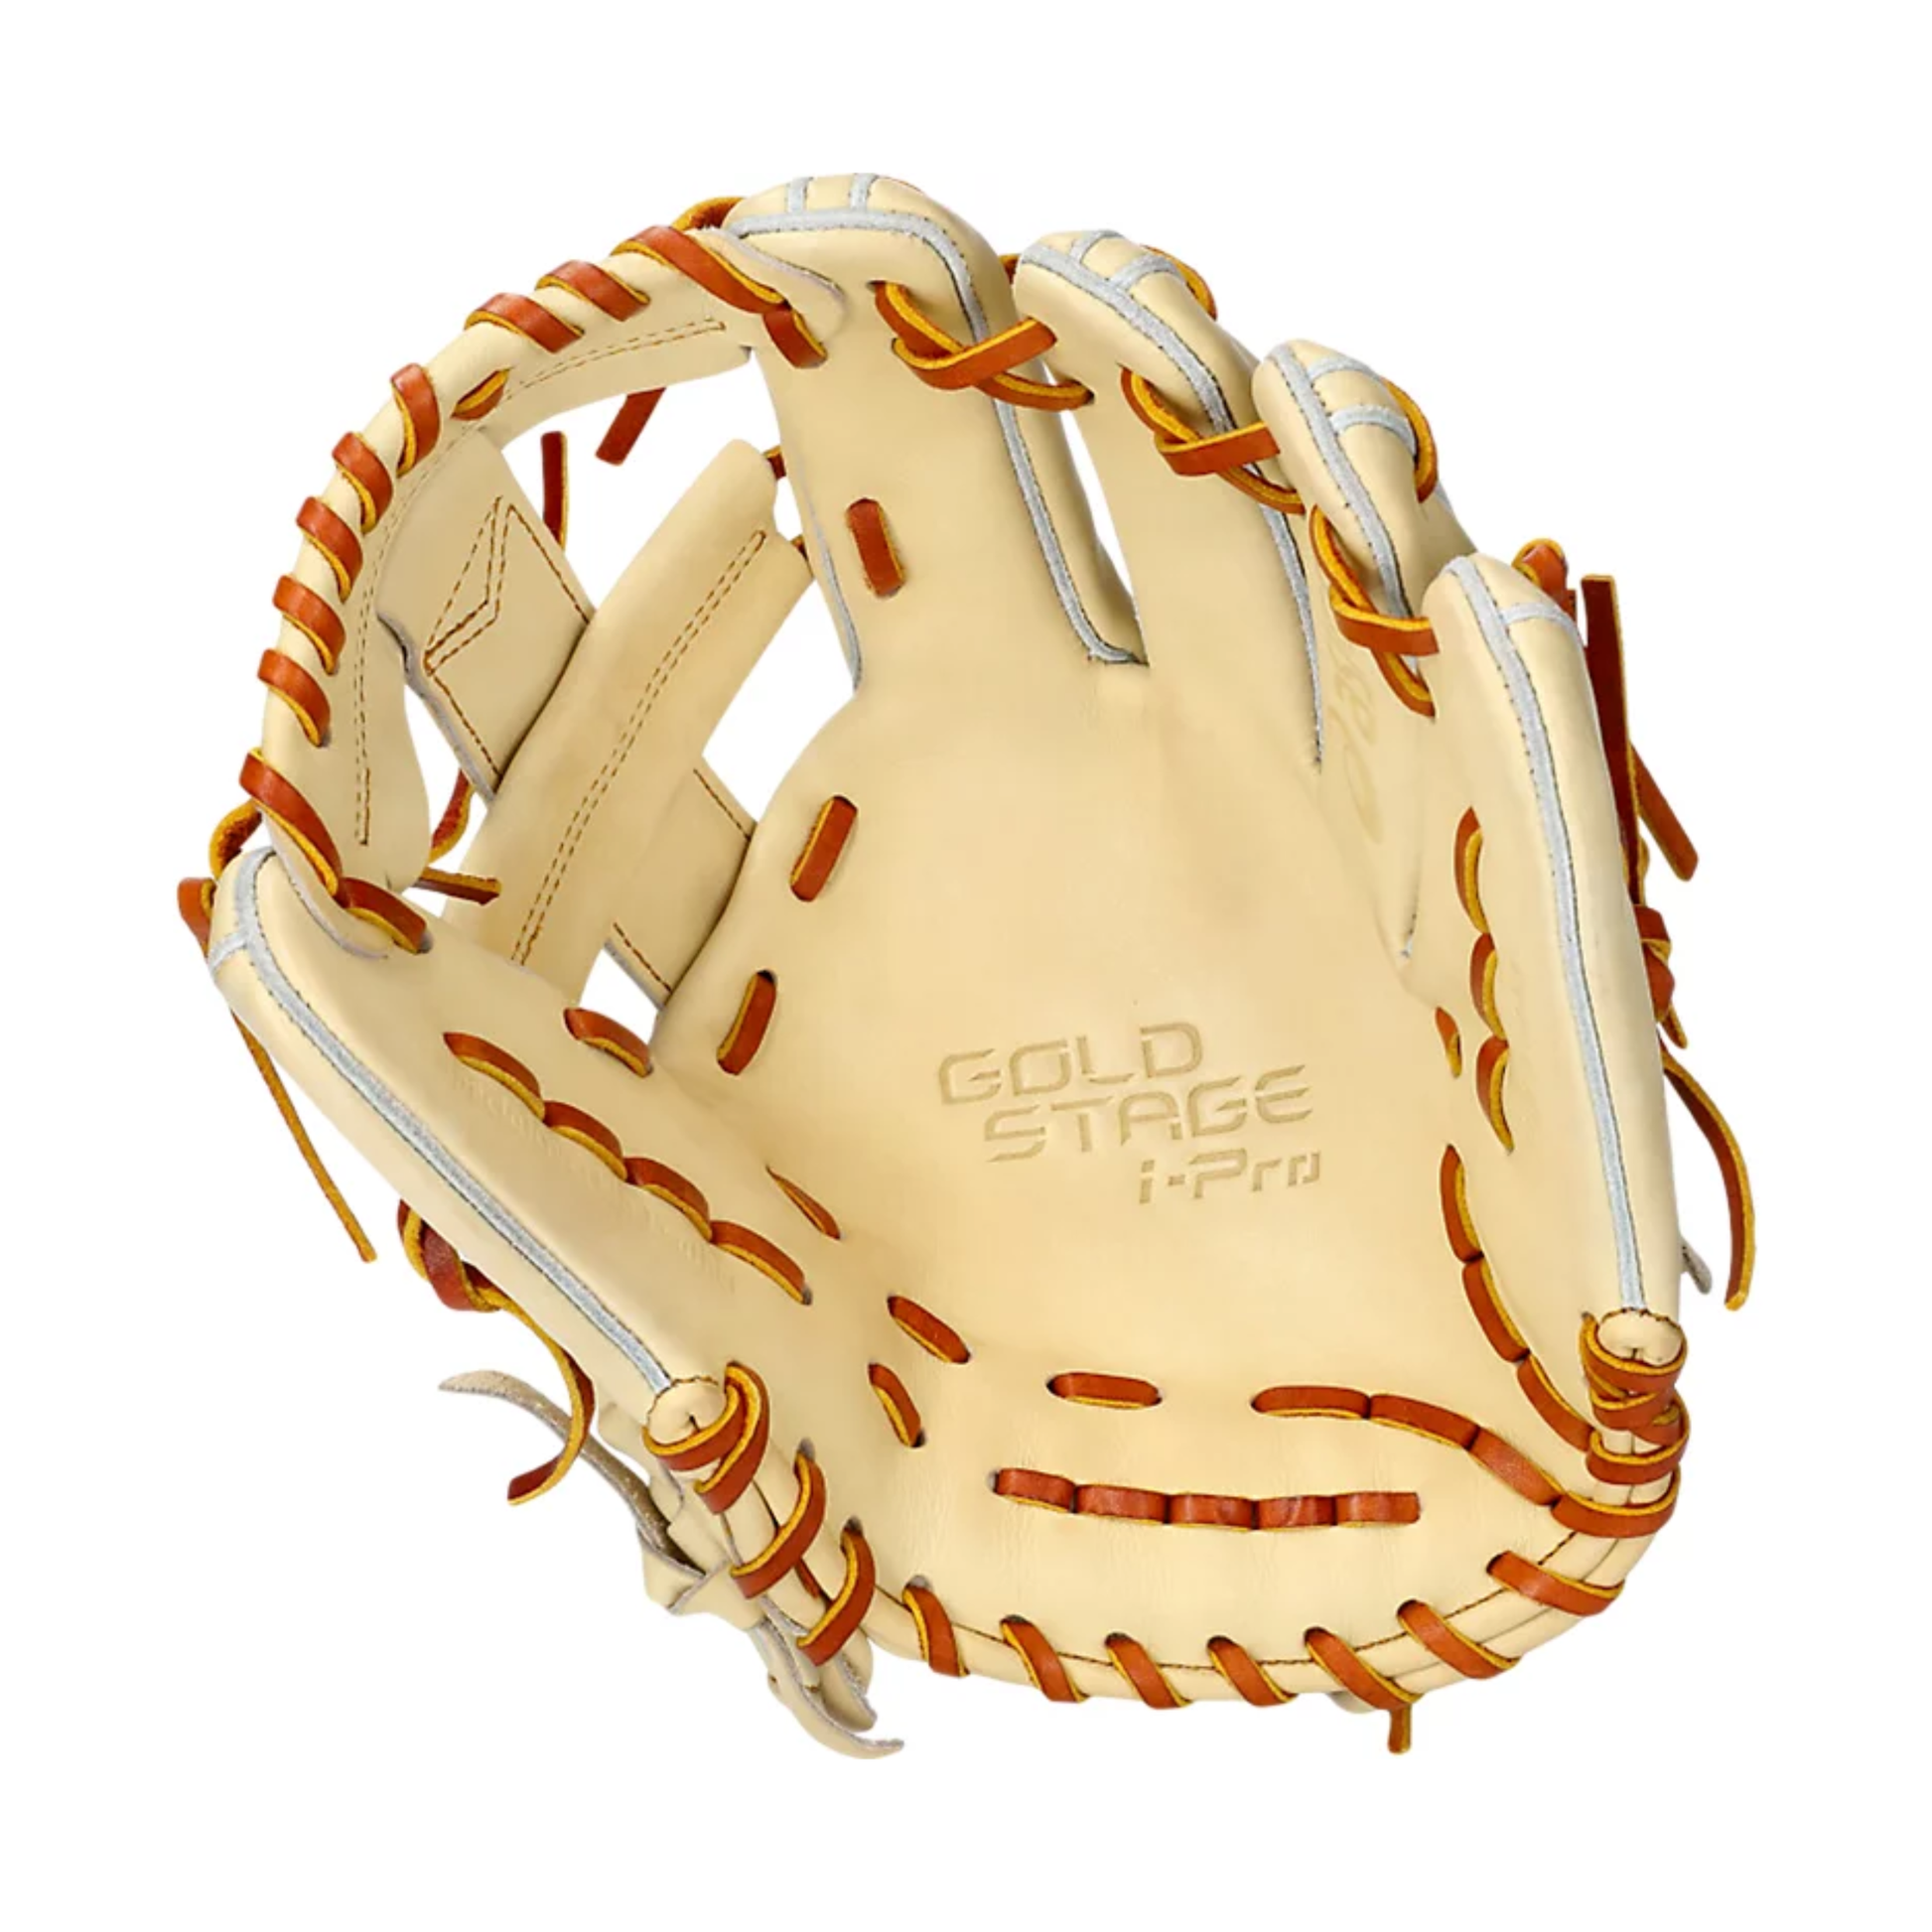 NEW IN BOX Asics Gold Stage Baseball Glove I Pro Baseball Glove